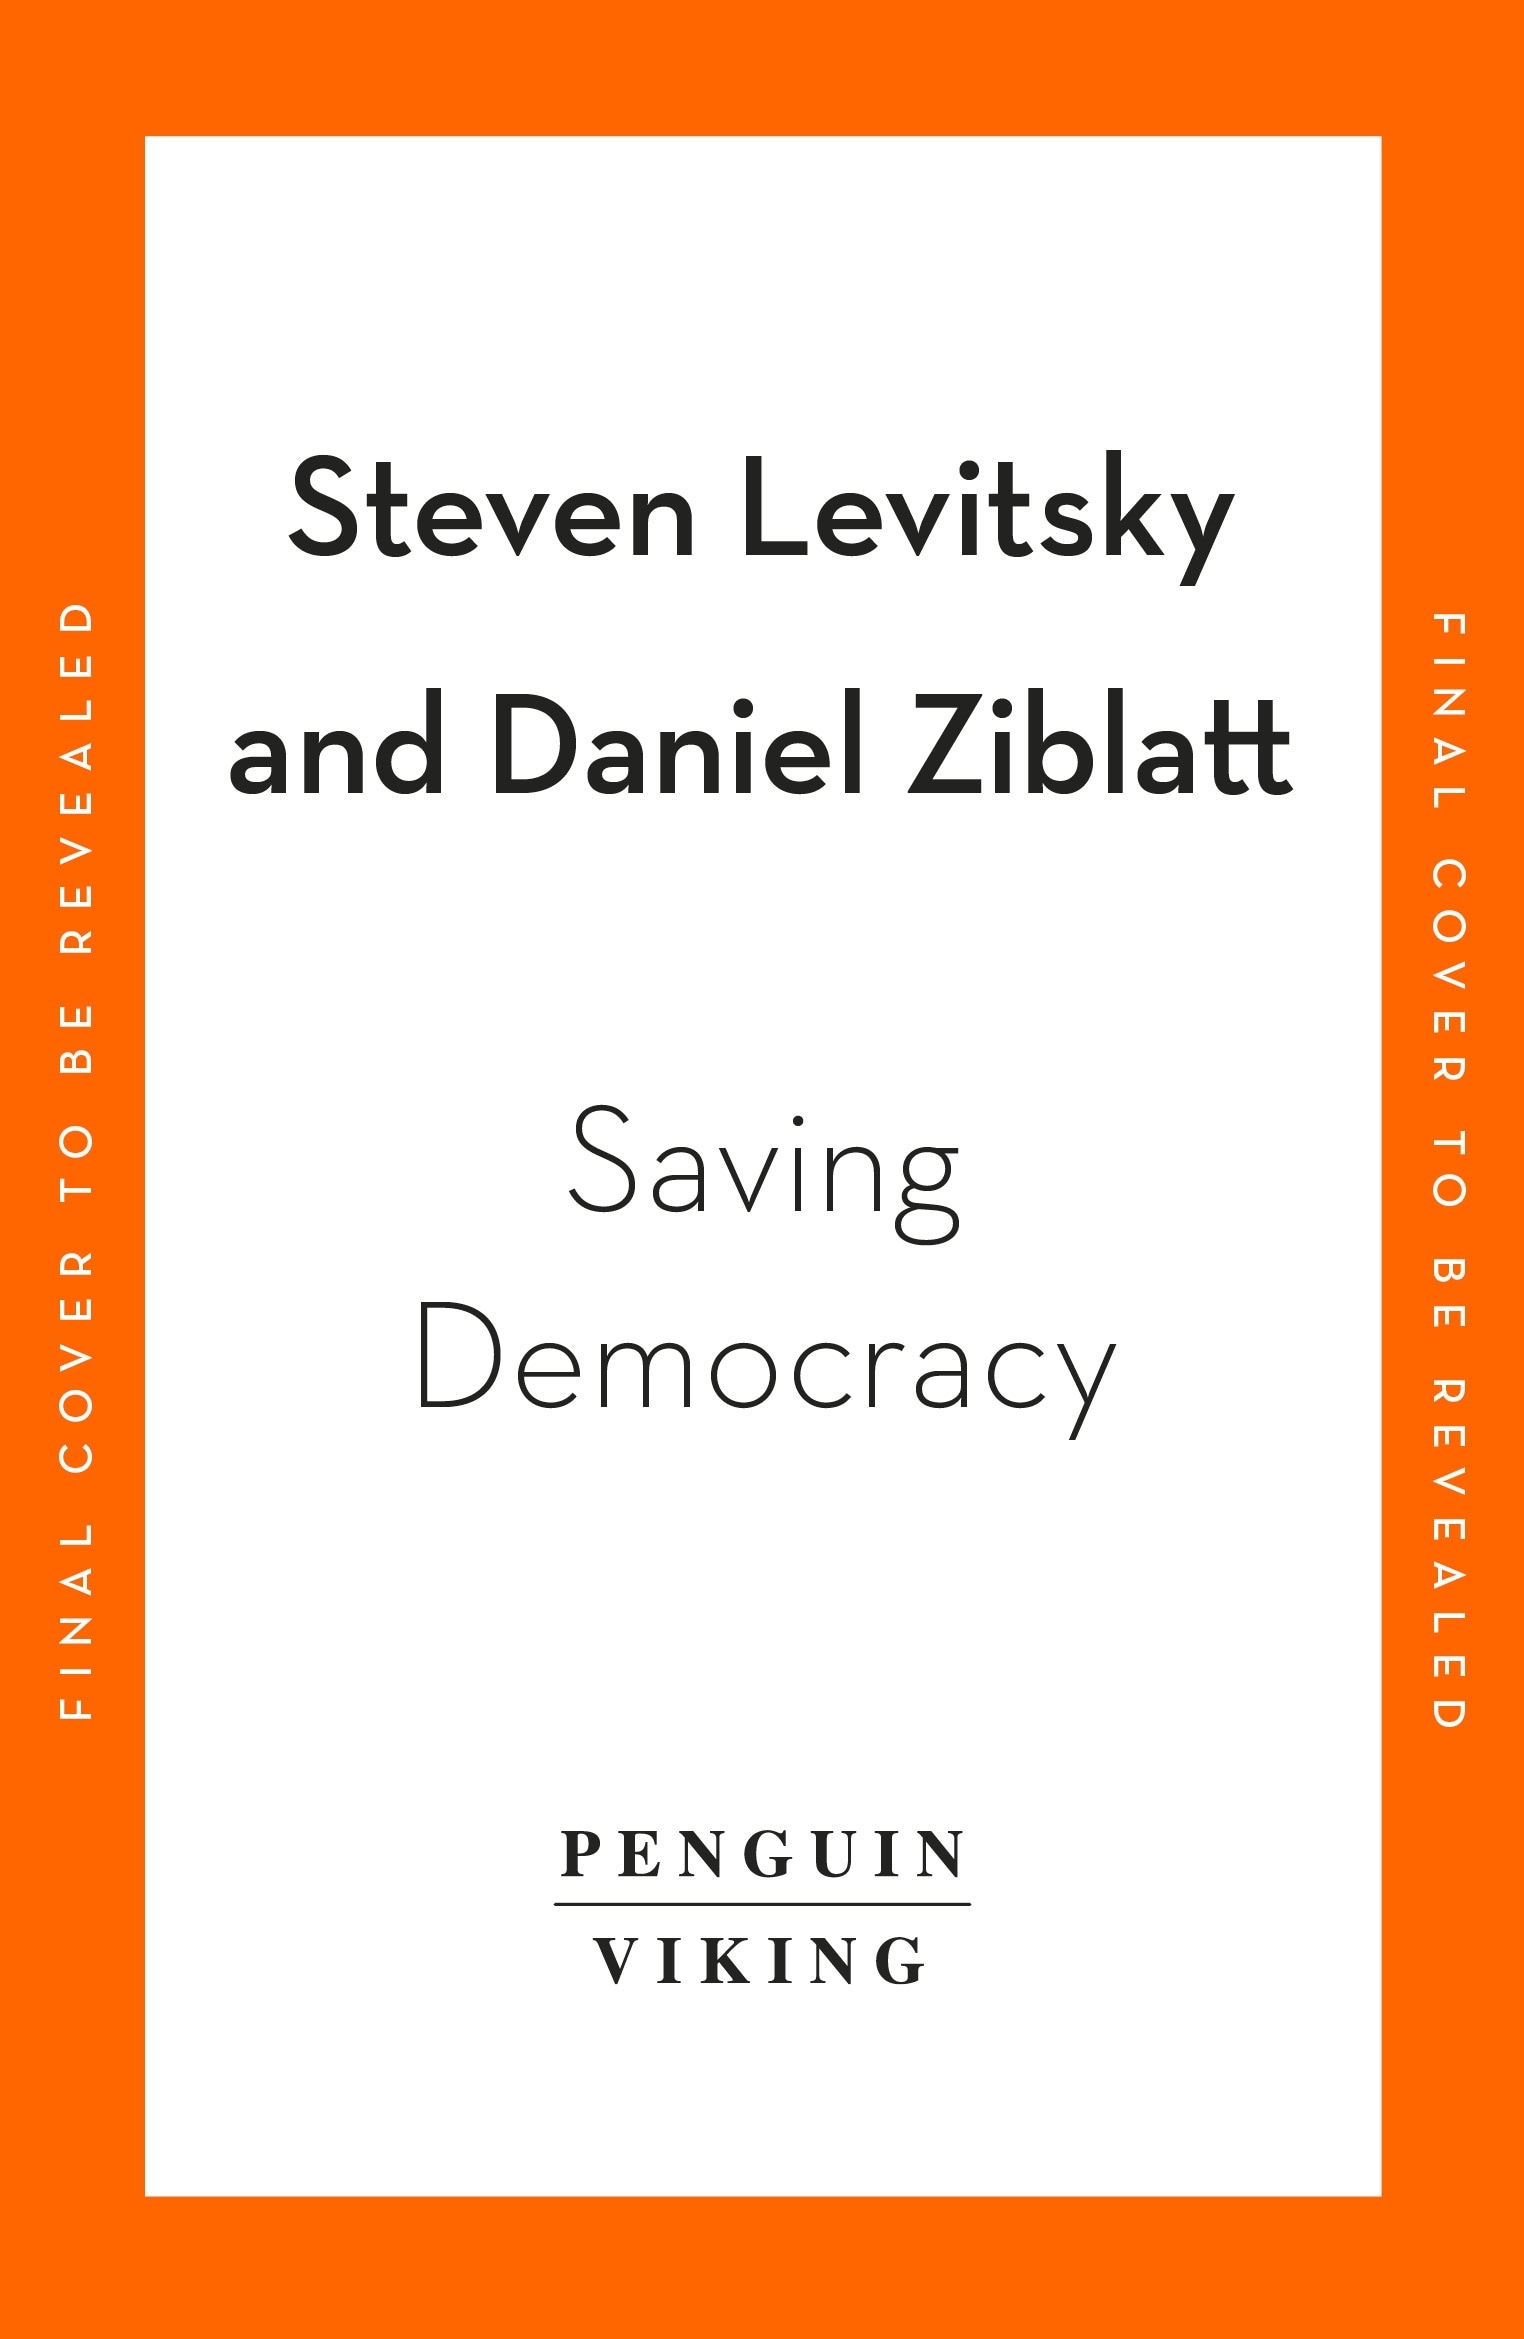 Book “Saving Democracy” by Steven Levitsky, Daniel Ziblatt — January 12, 2023